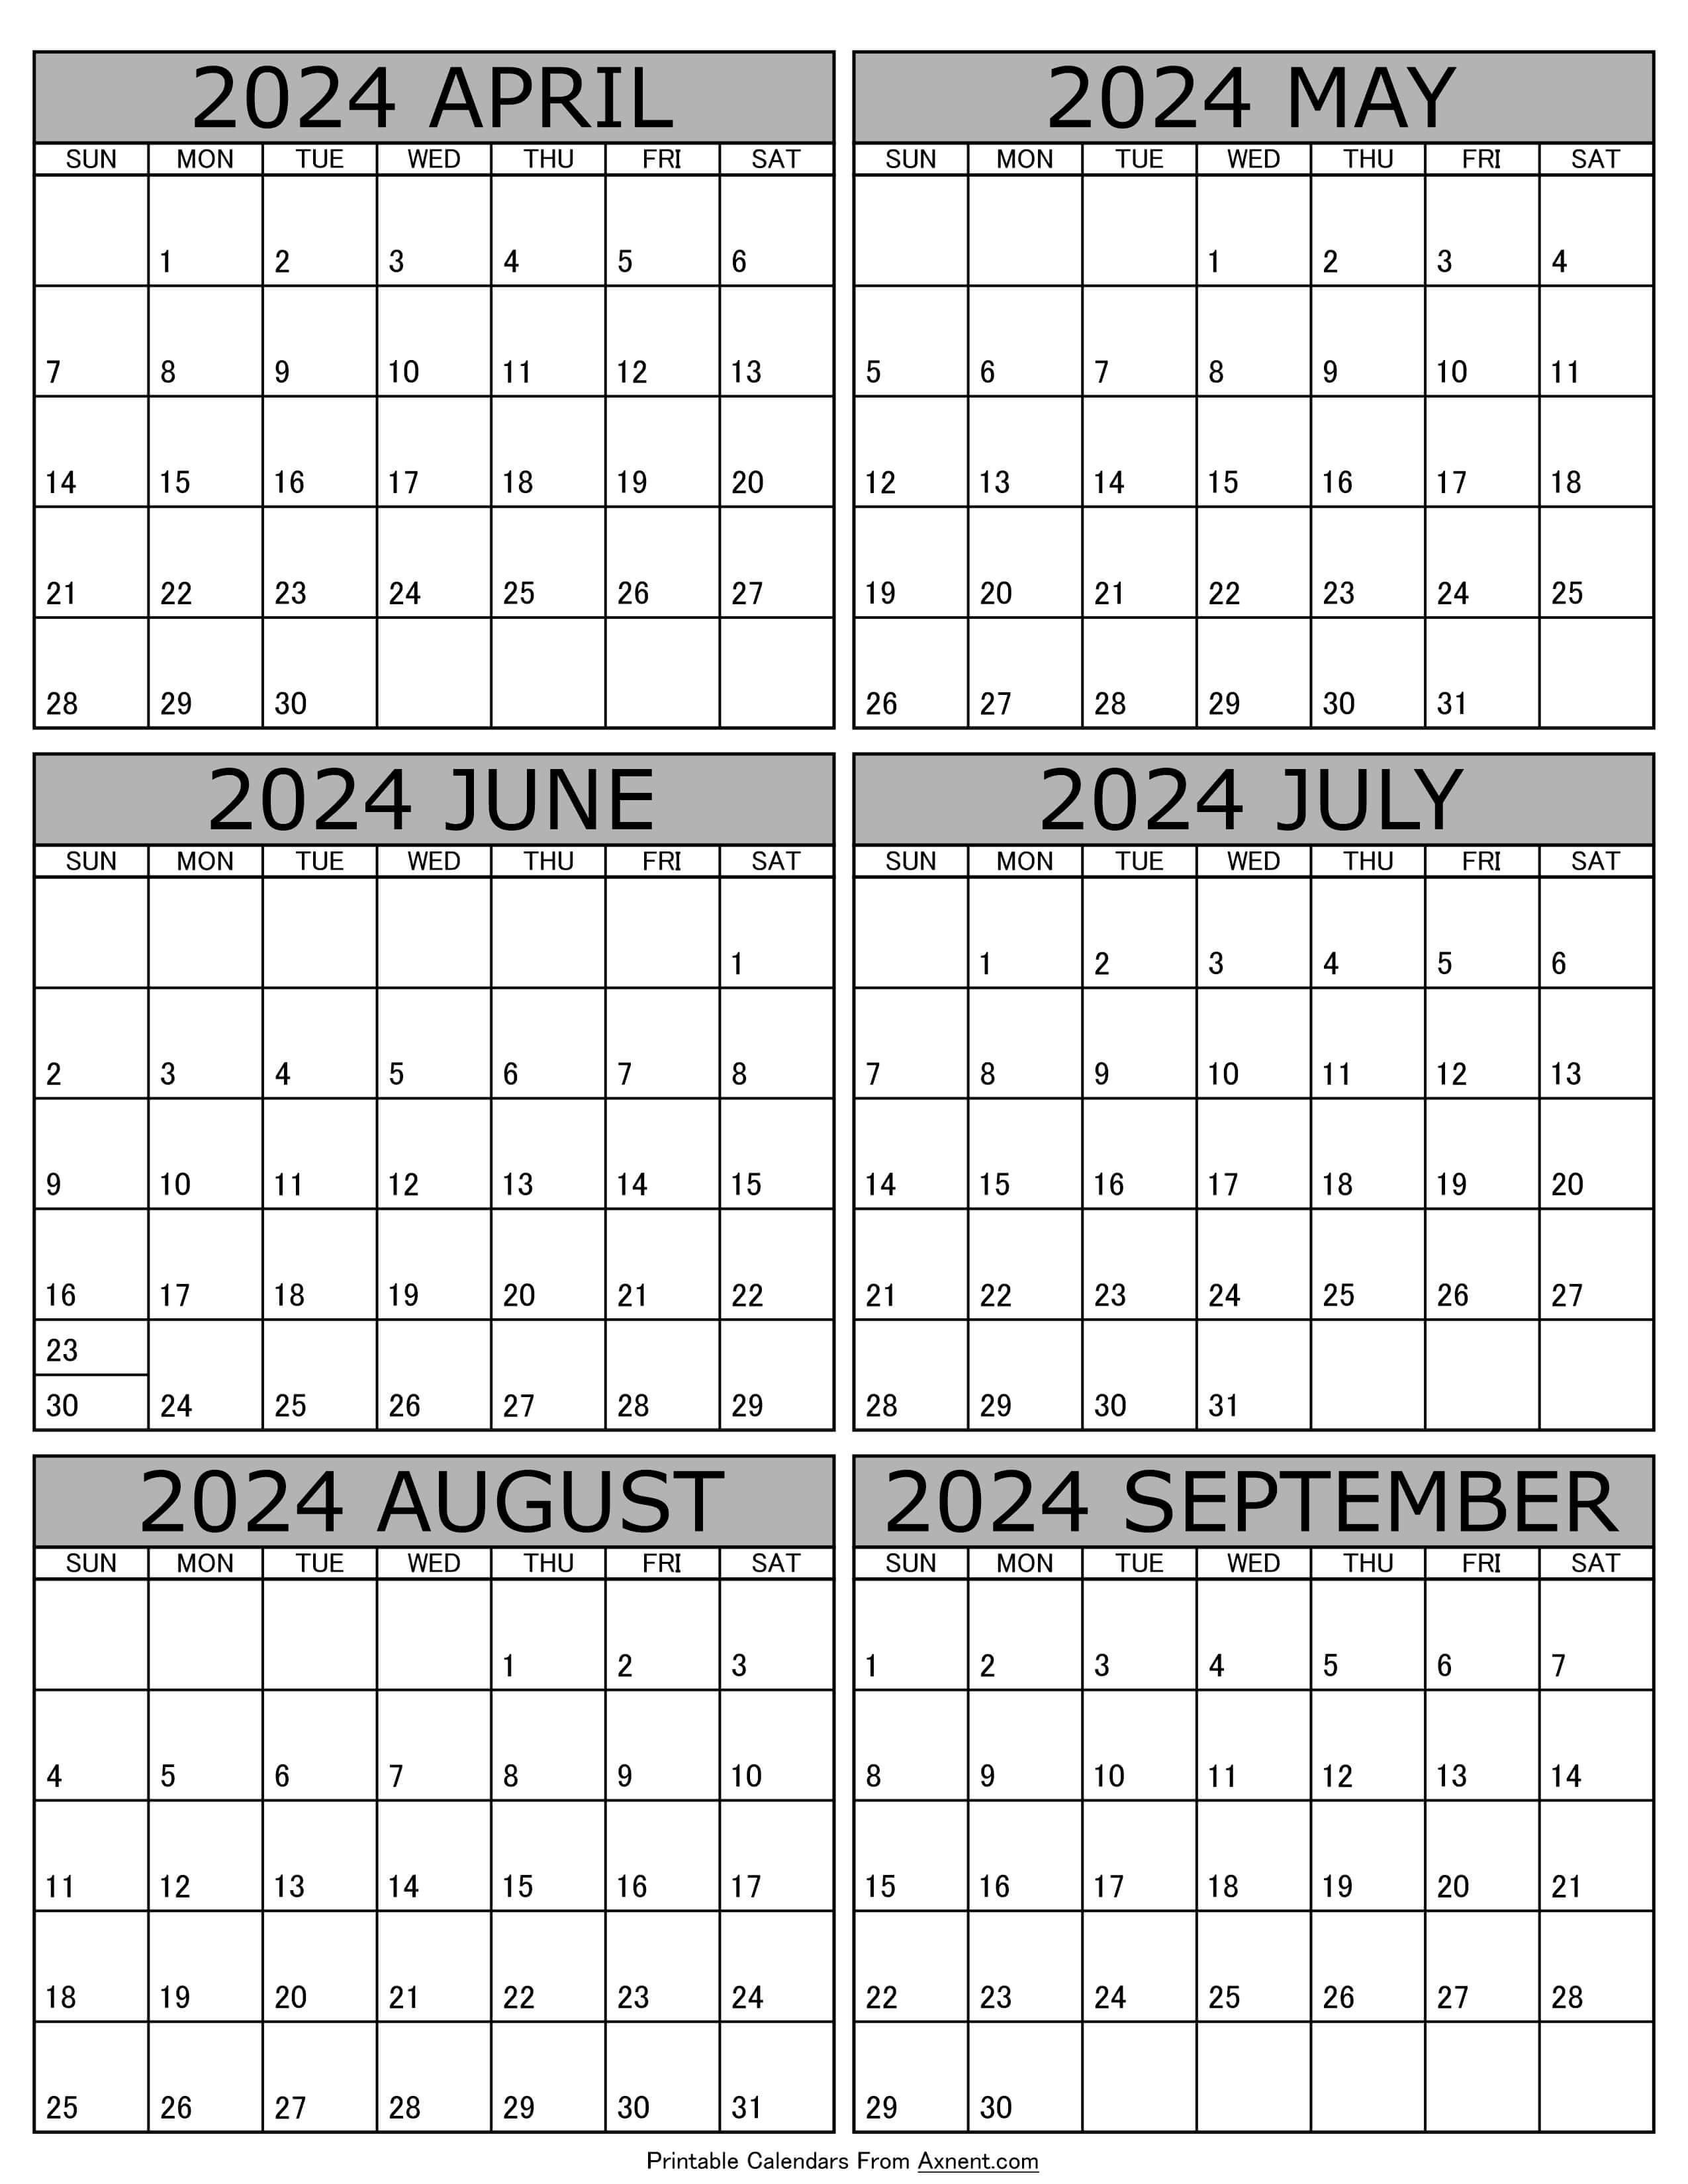 Calendar 2024 April to September